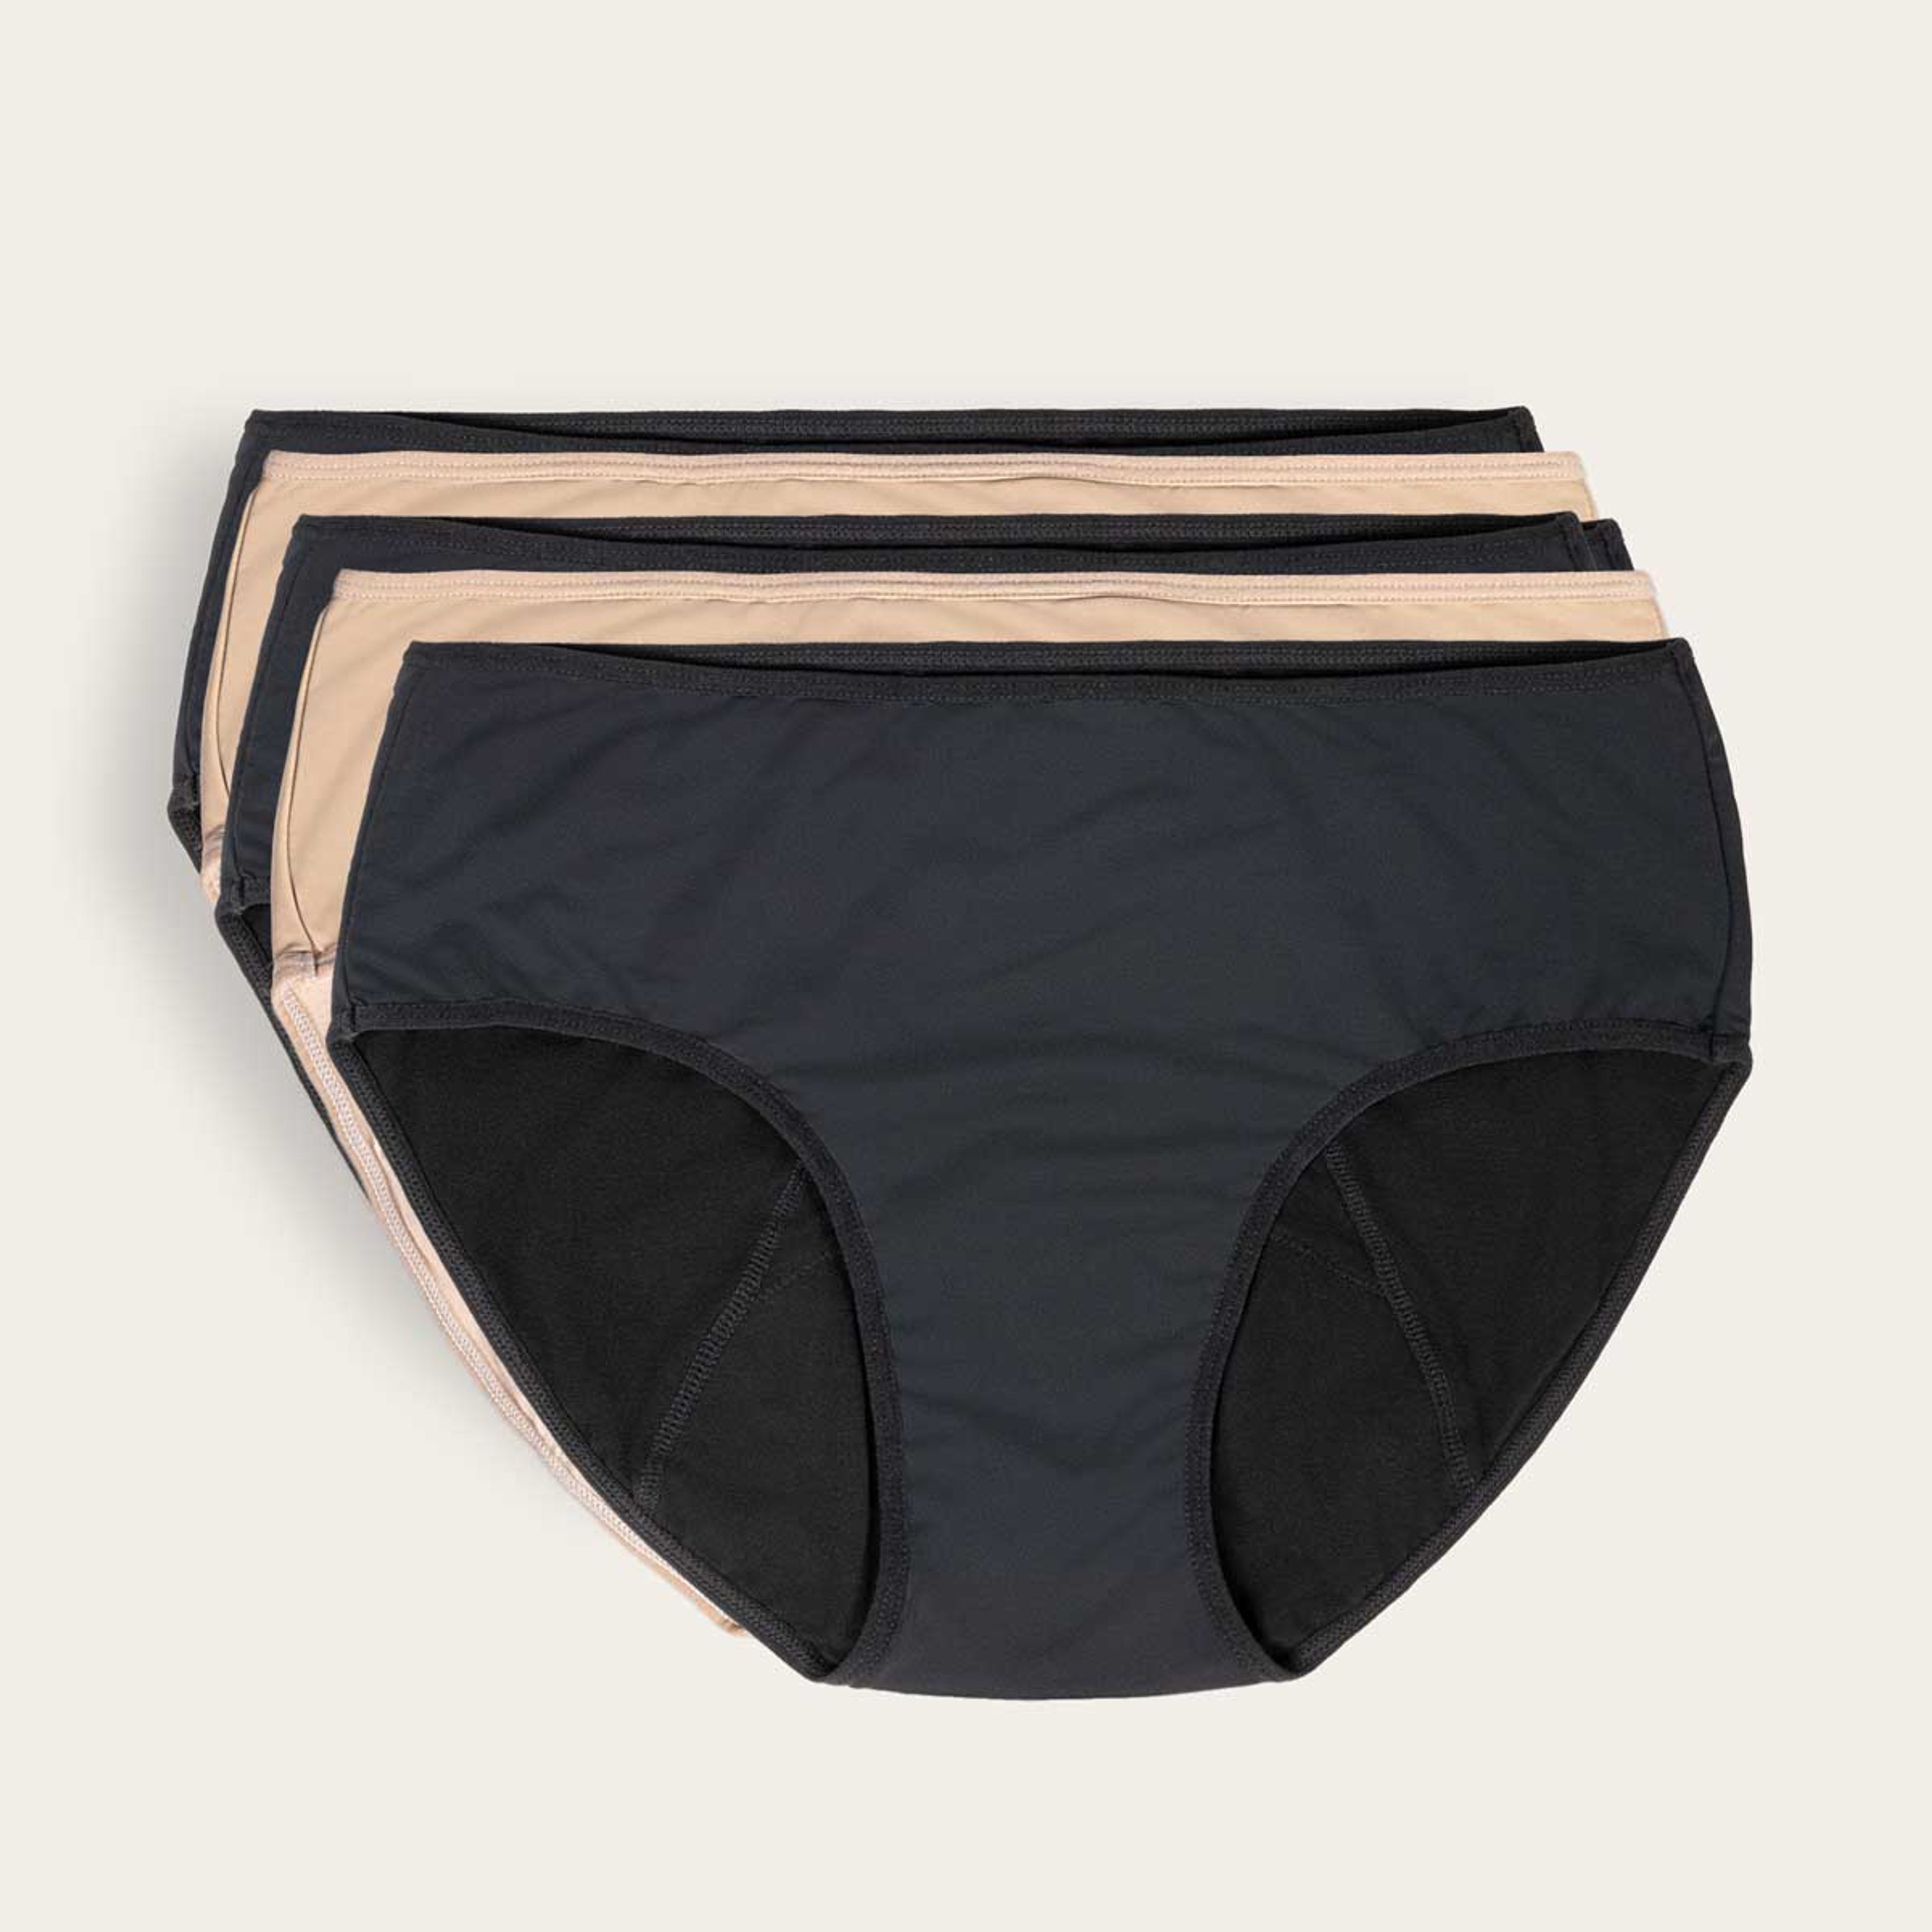 VieWear Period Comfort Underwear + Uterine Ice/Heat Bundle